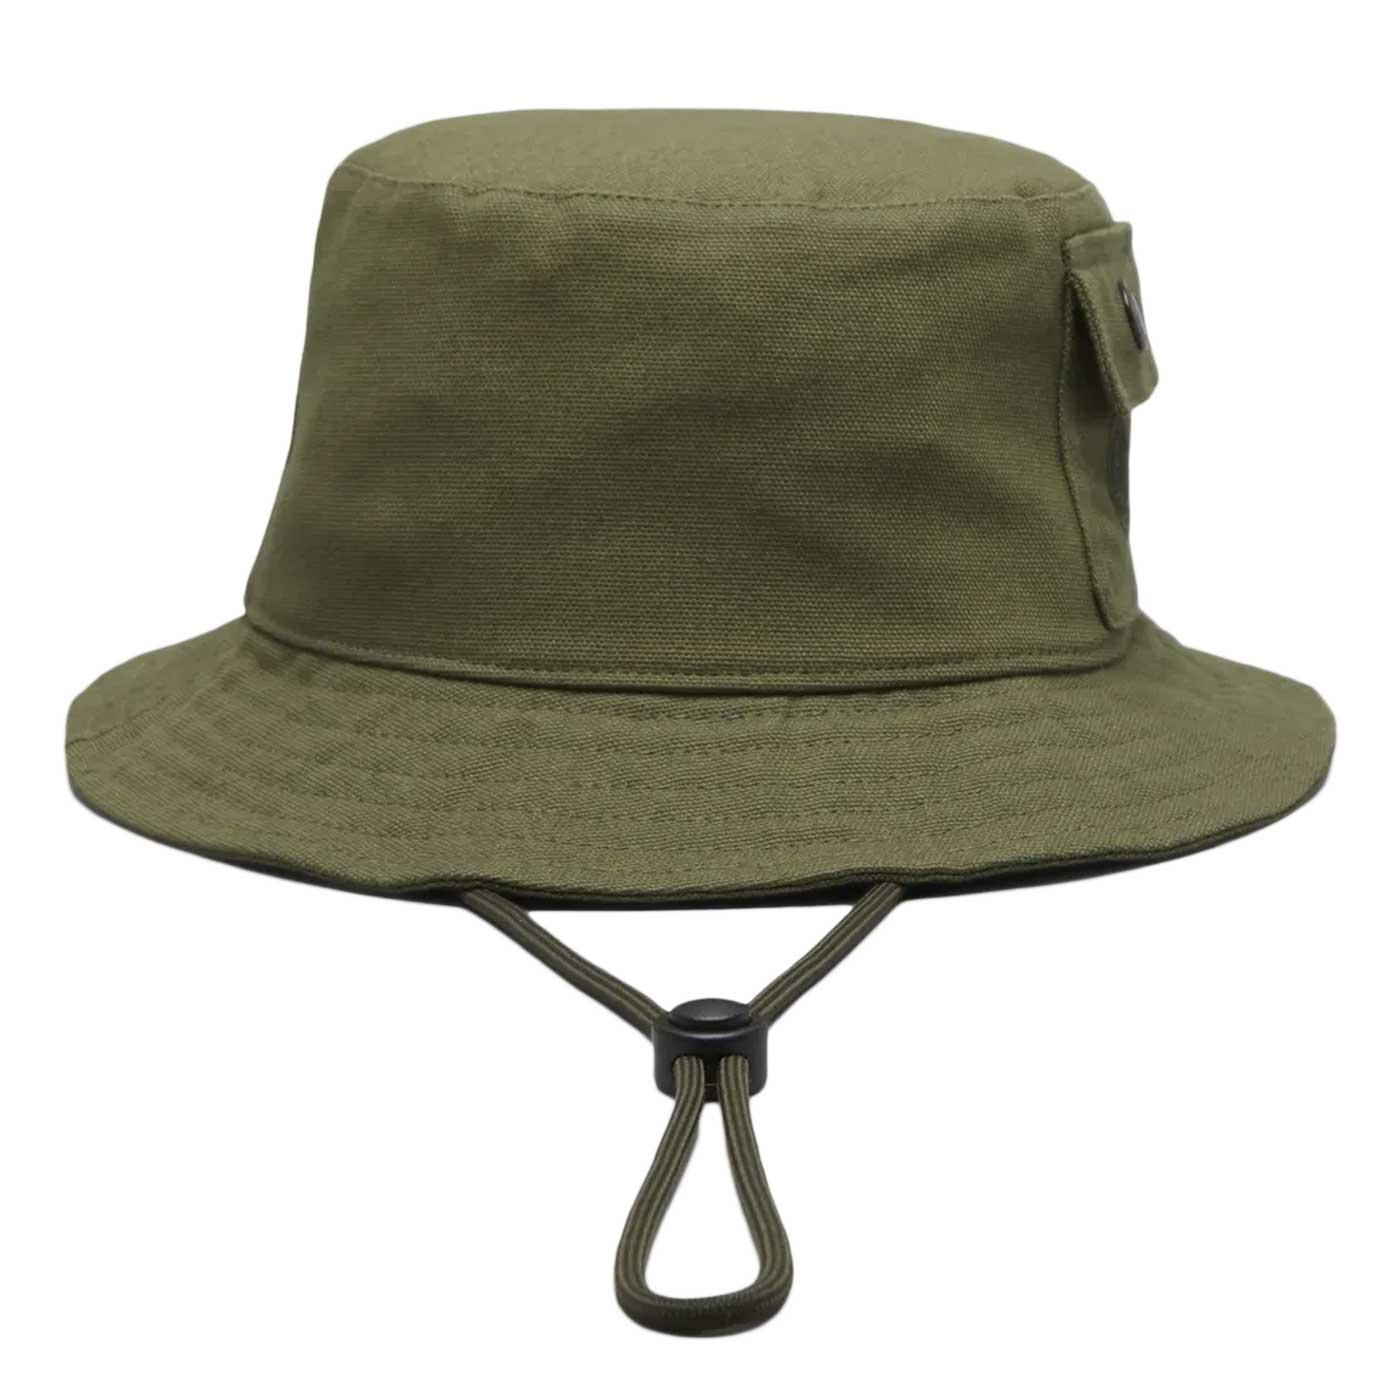 Prestleigh Pretty Green Retro Pocket Bucket Hat K